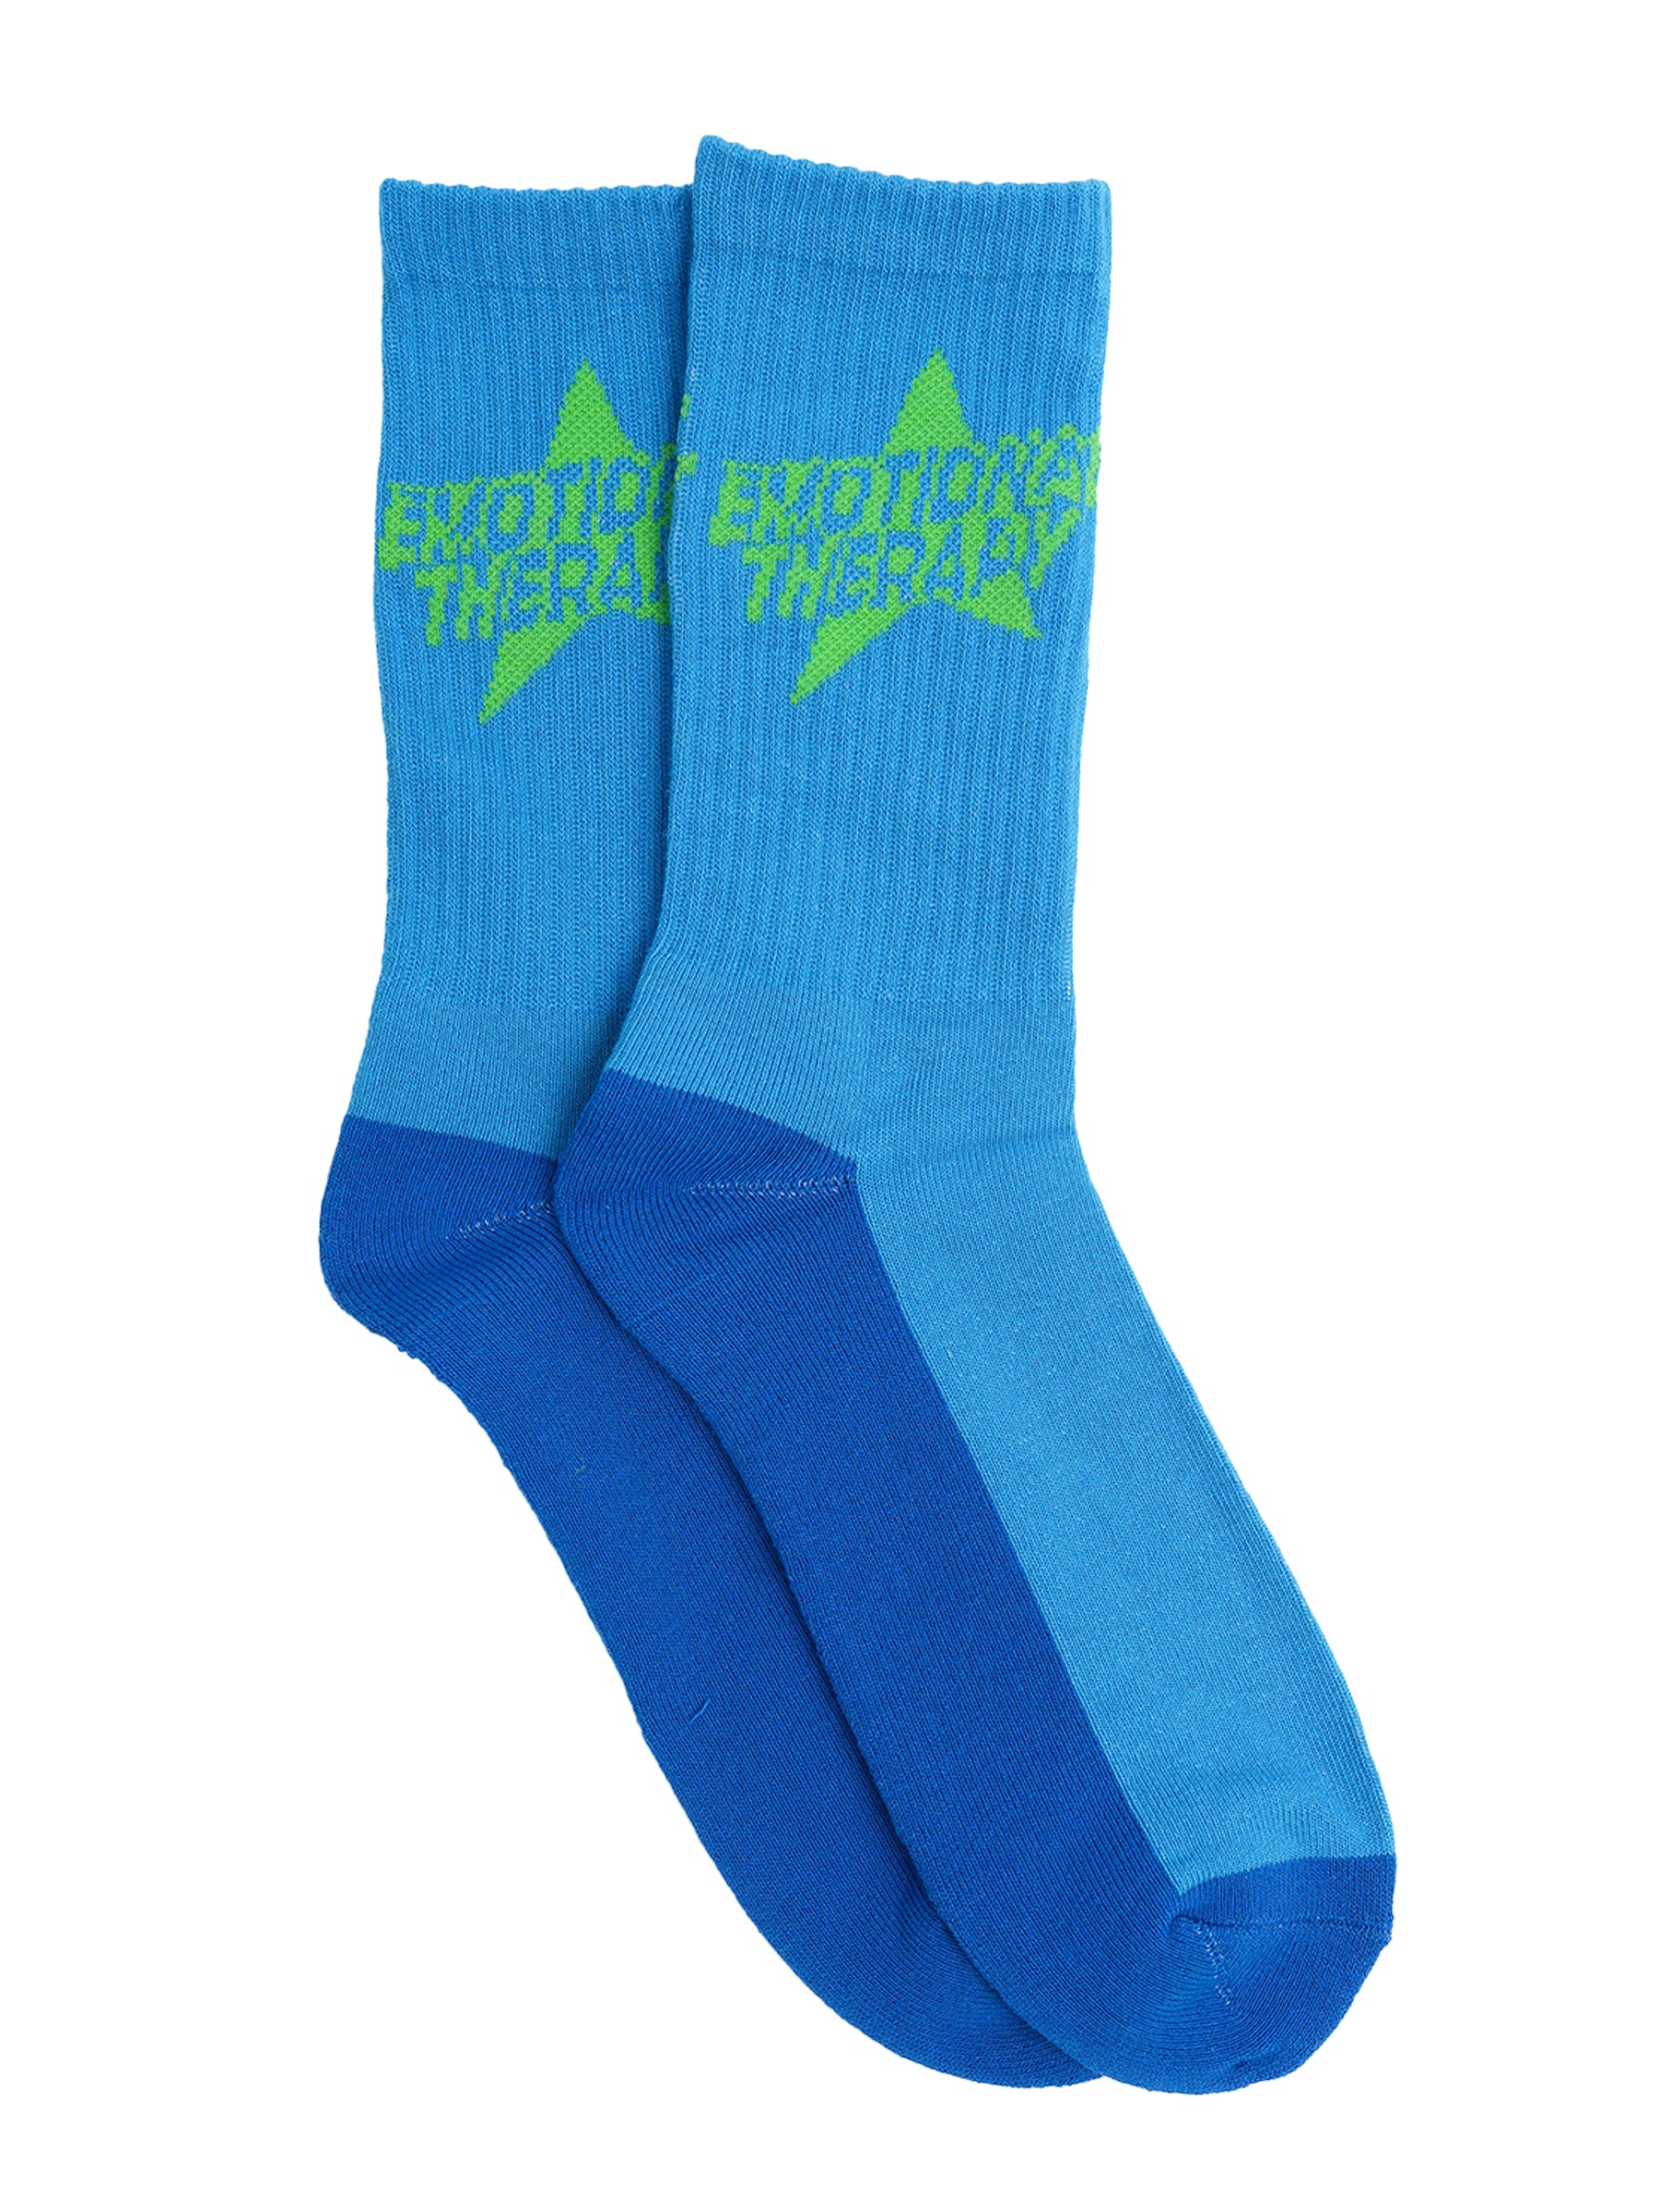 Star Socks (Blue + Green)